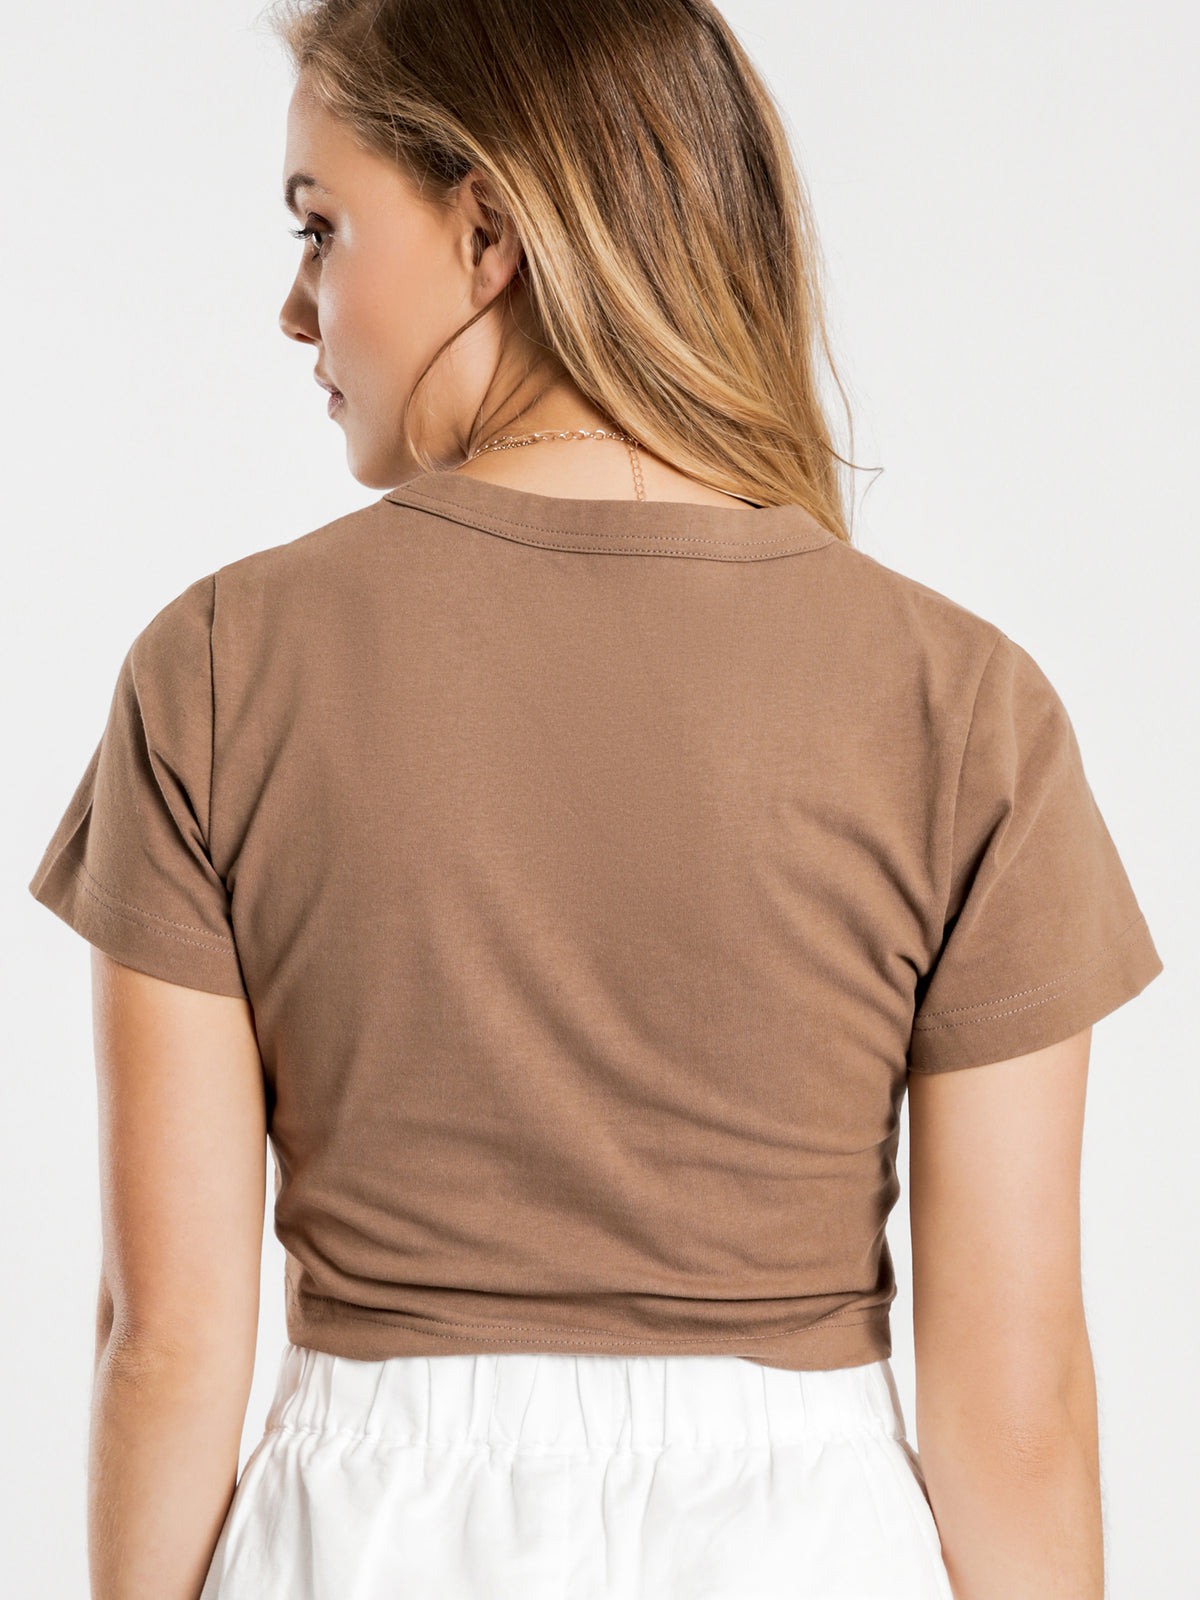 Brea Drawstring T-Shirt in Chocolate